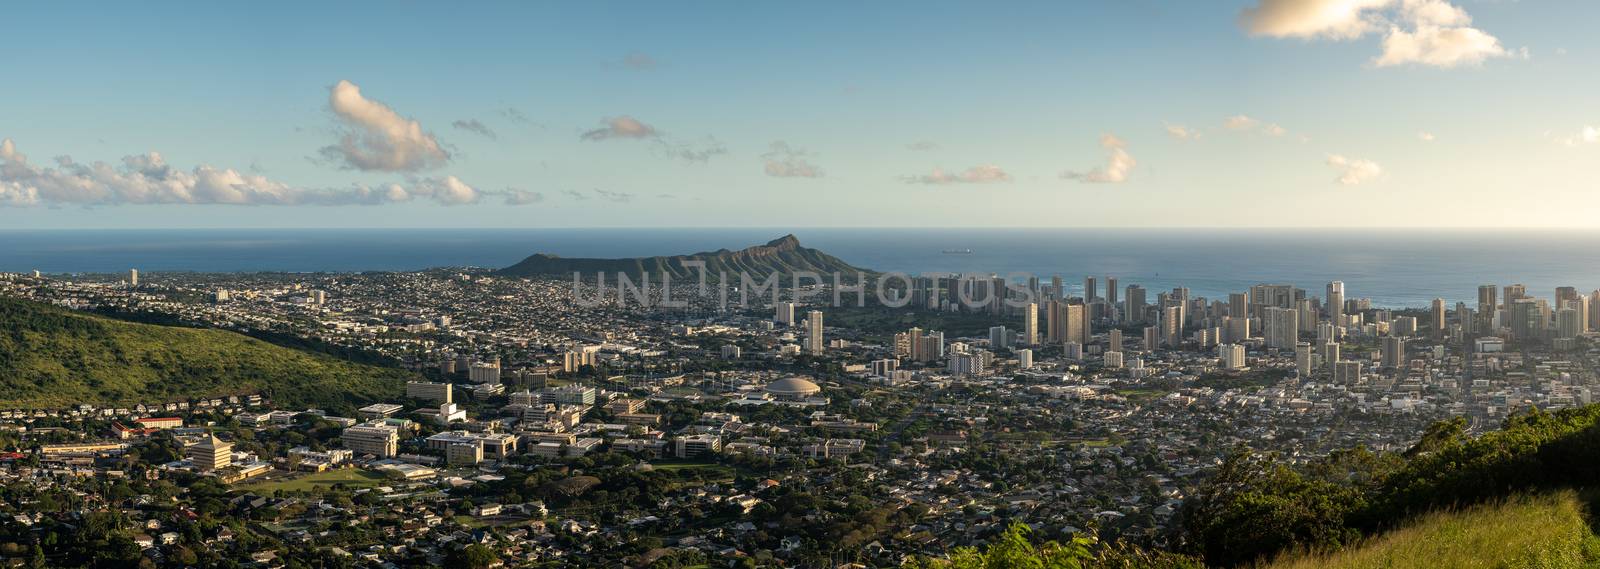 Wide panoramic image of sunset over Waikiki, Honolulu and Diamond Head from the Tantalus Overlook on Oahu, Hawaii